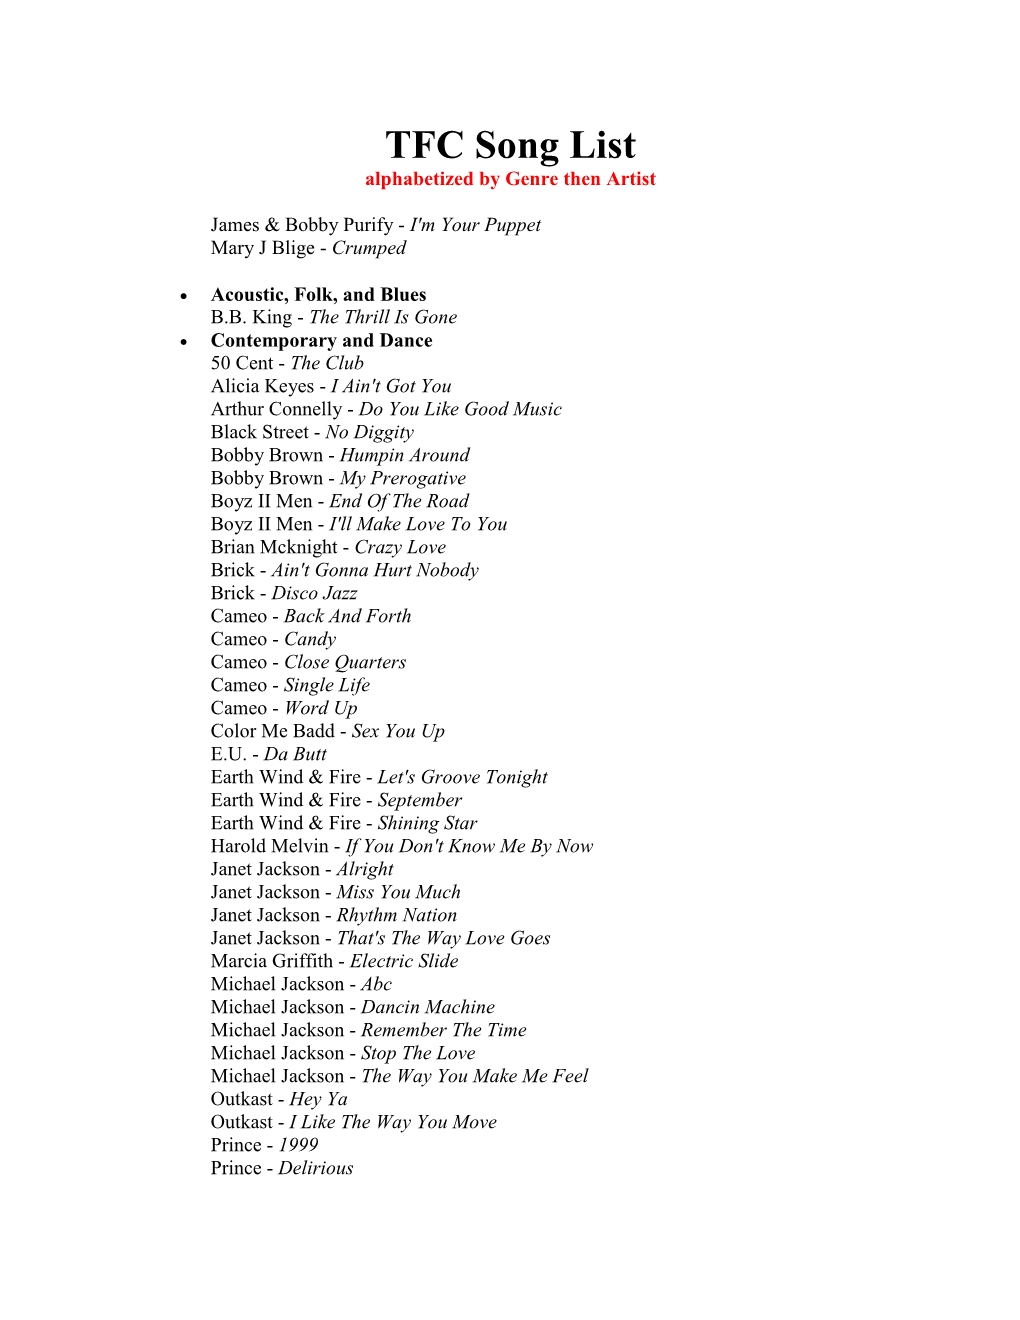 TFC Song List Alphabetized by Genre Then Artist